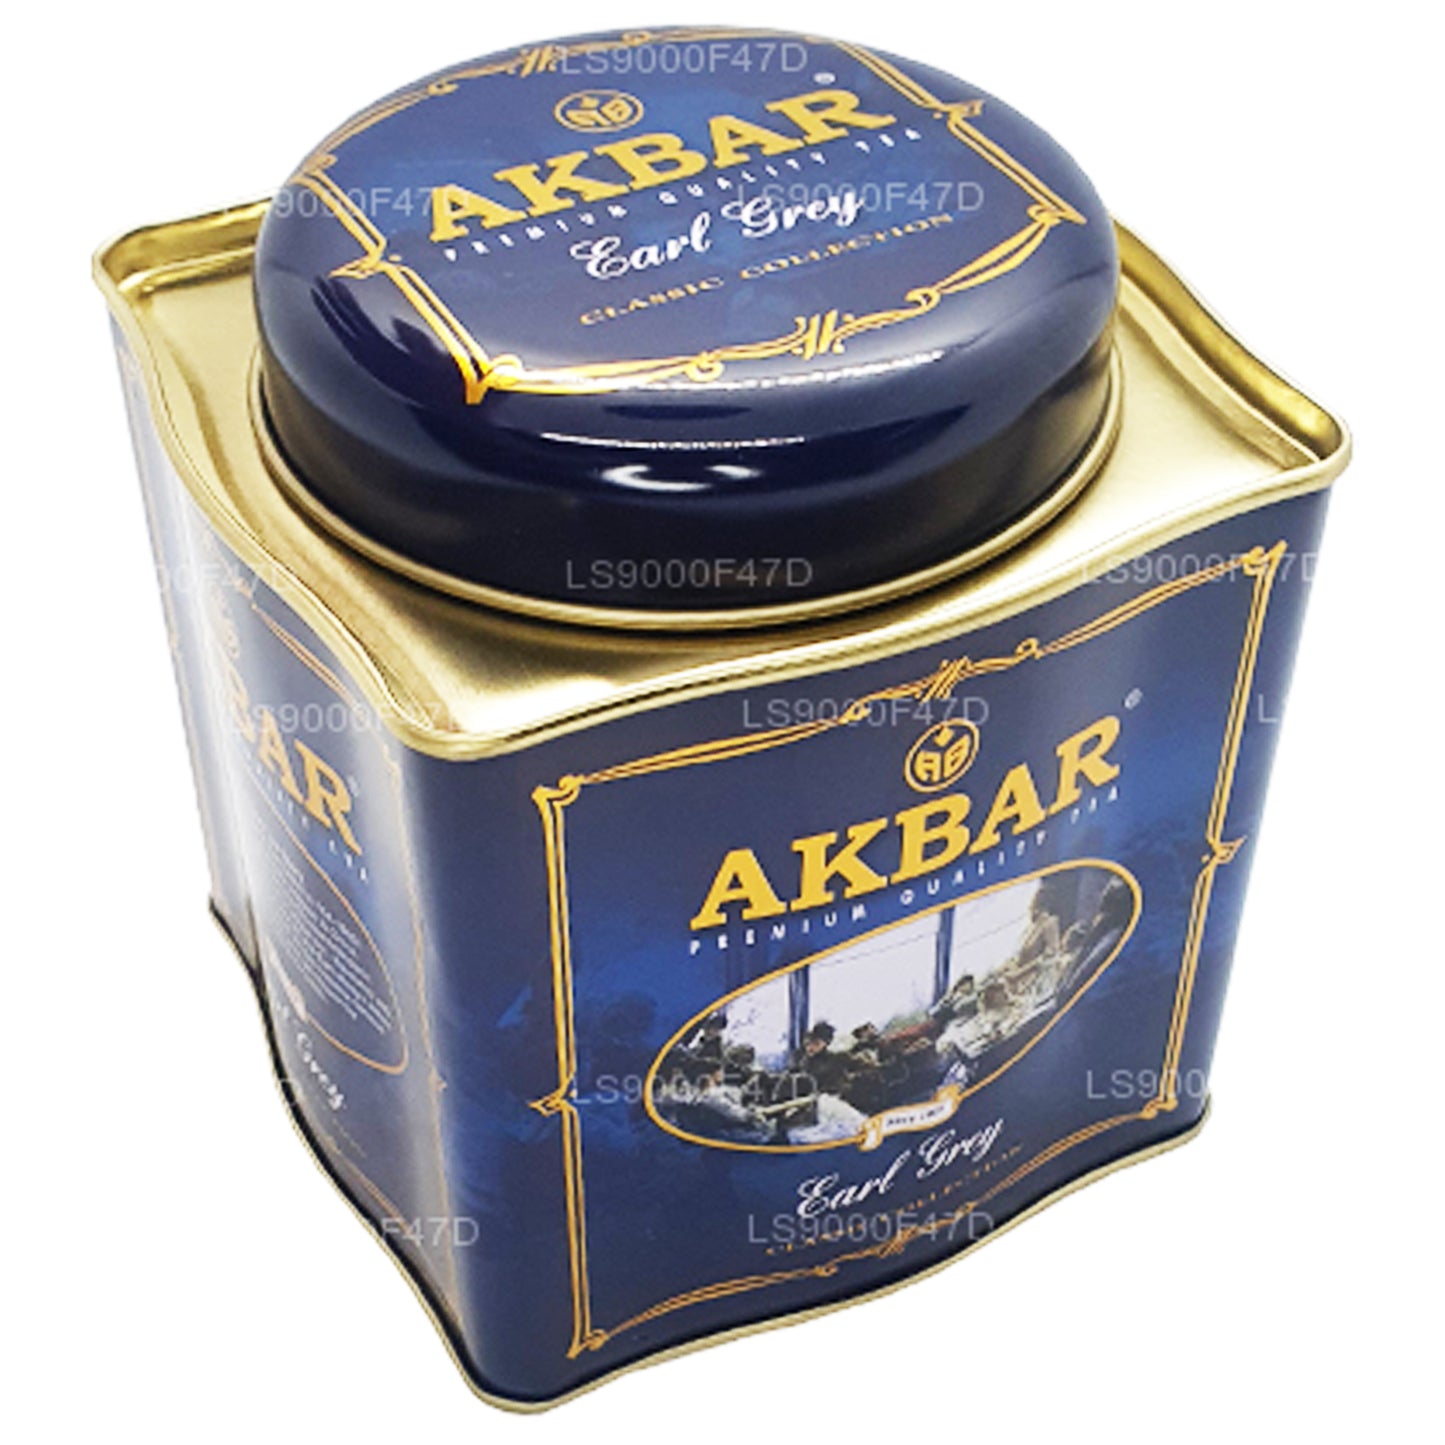 Akbar Classic Earl Grey Leaf Te (250g) Tenn